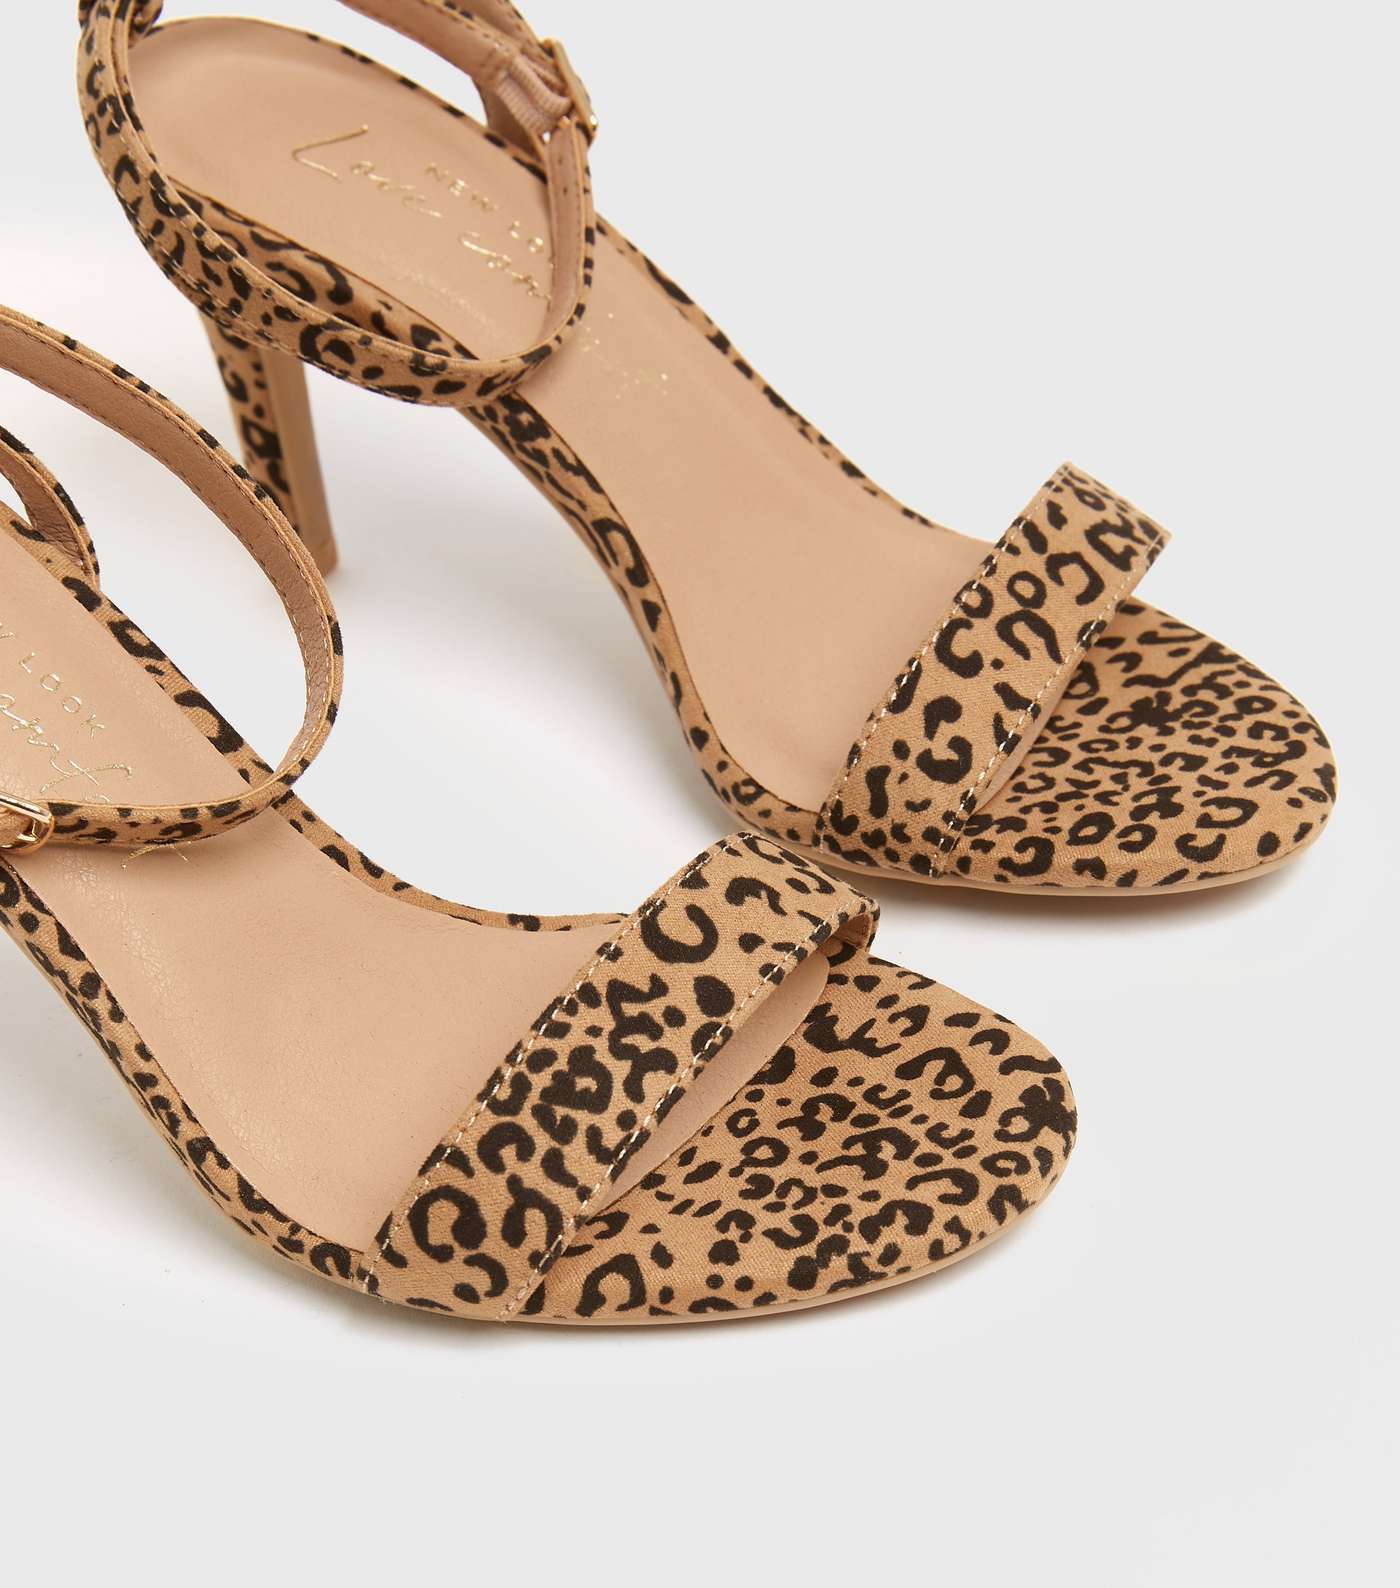 Stone Leopard Print Suedette Stiletto Heel Sandals Image 3